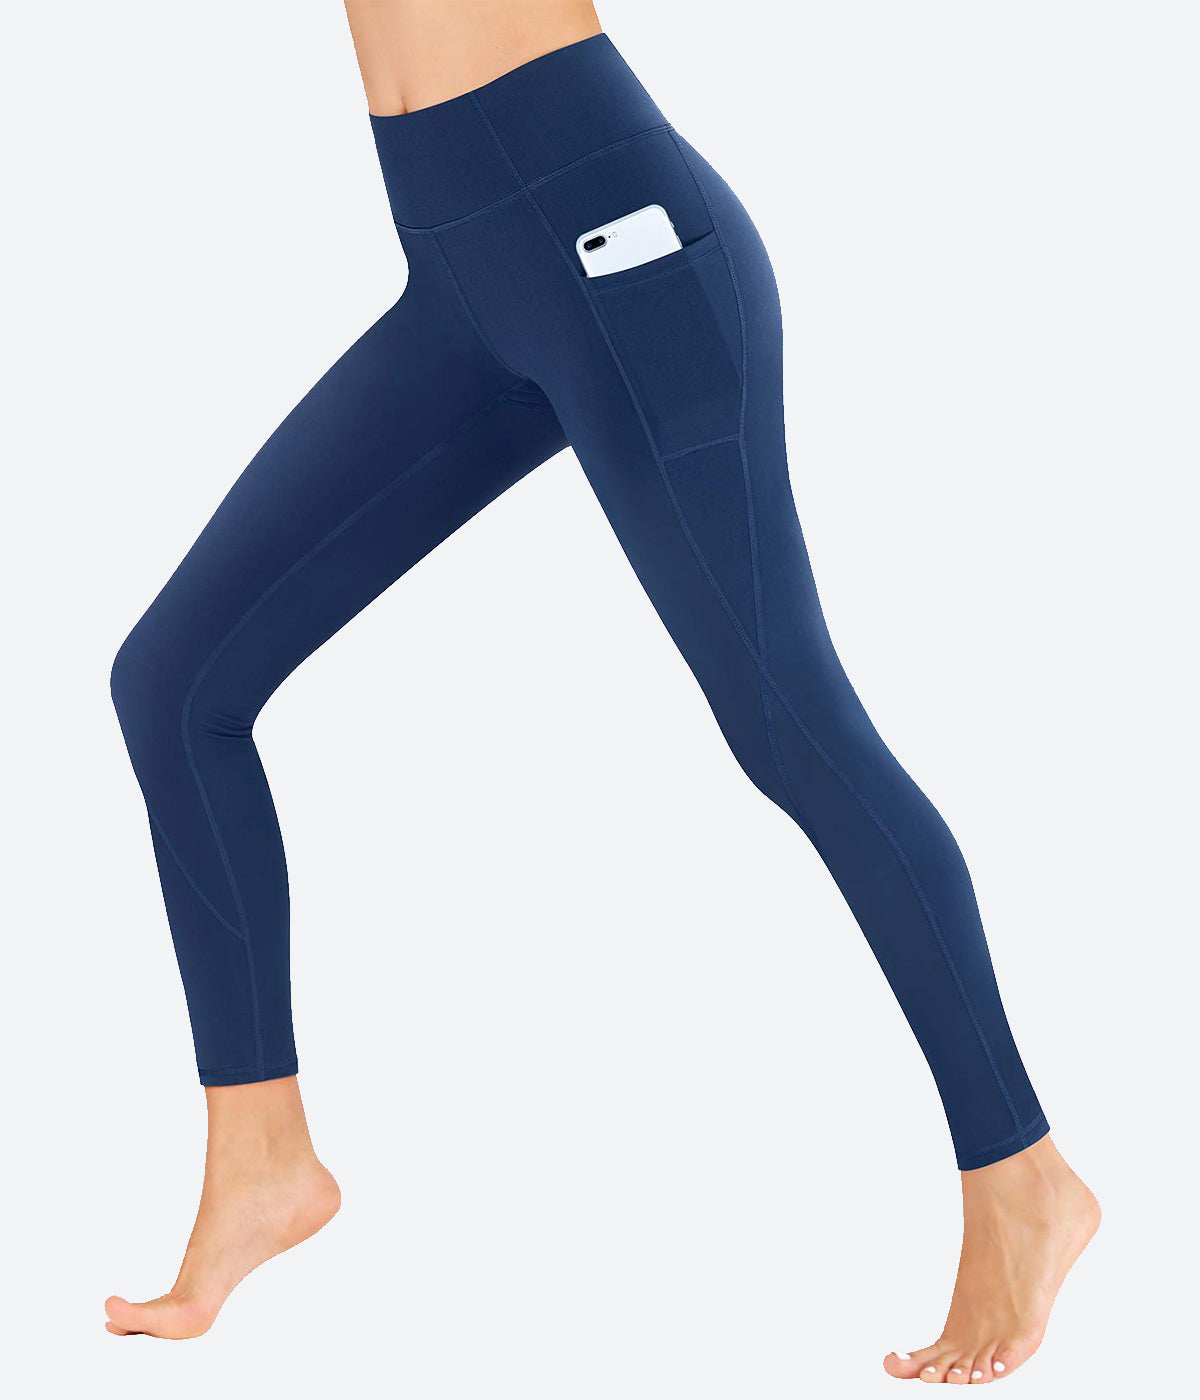  visesunny High Waist Yoga Pants with Pockets Blue